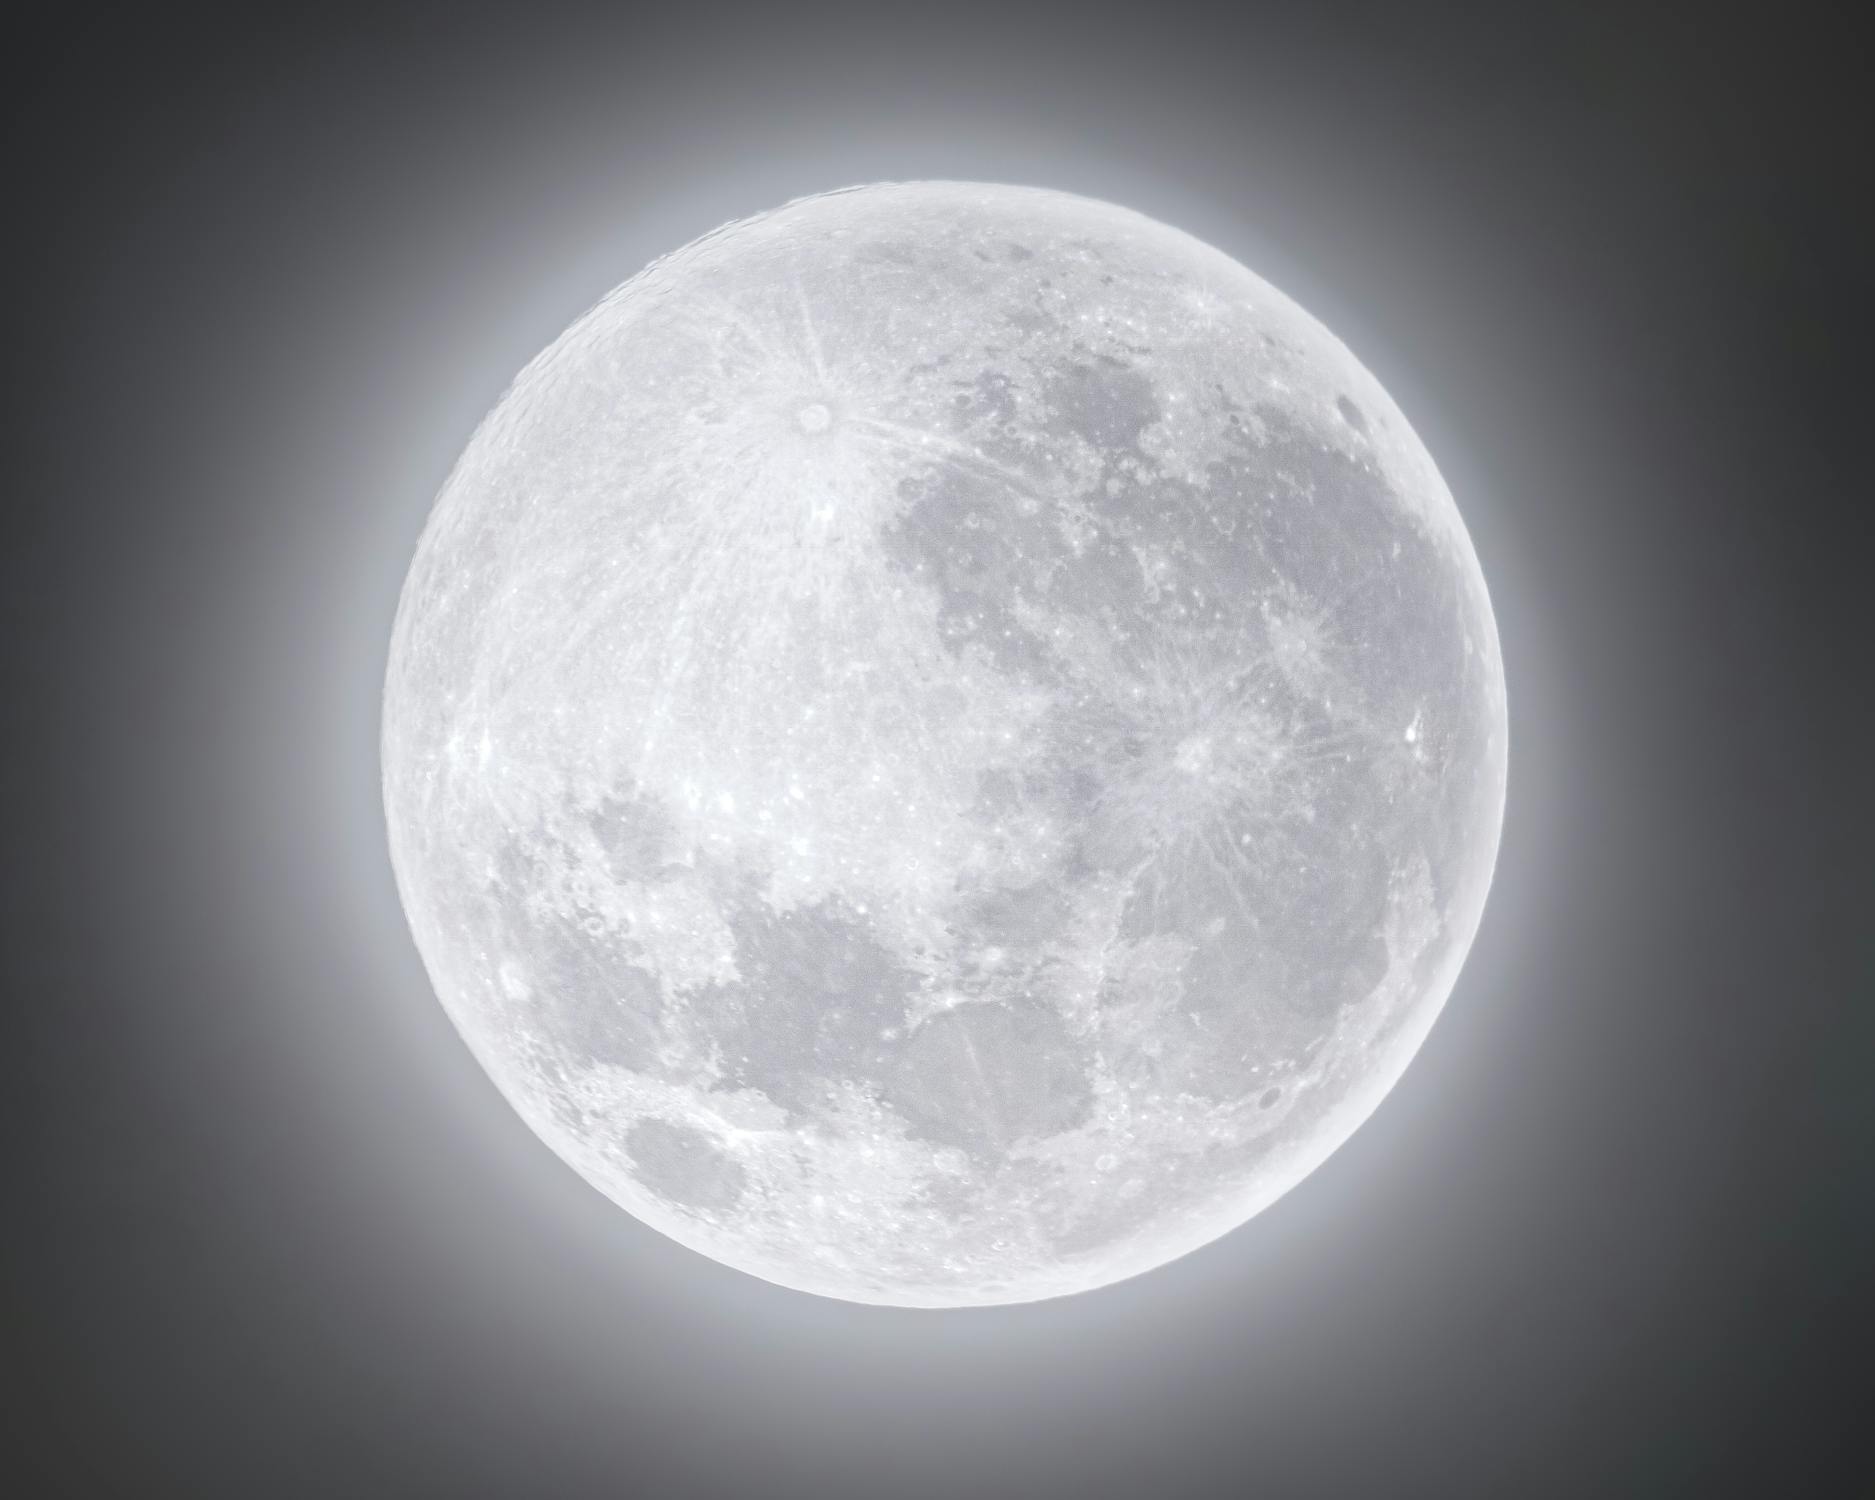 CloseUp Shot of a Full Moon · Free Stock Photo